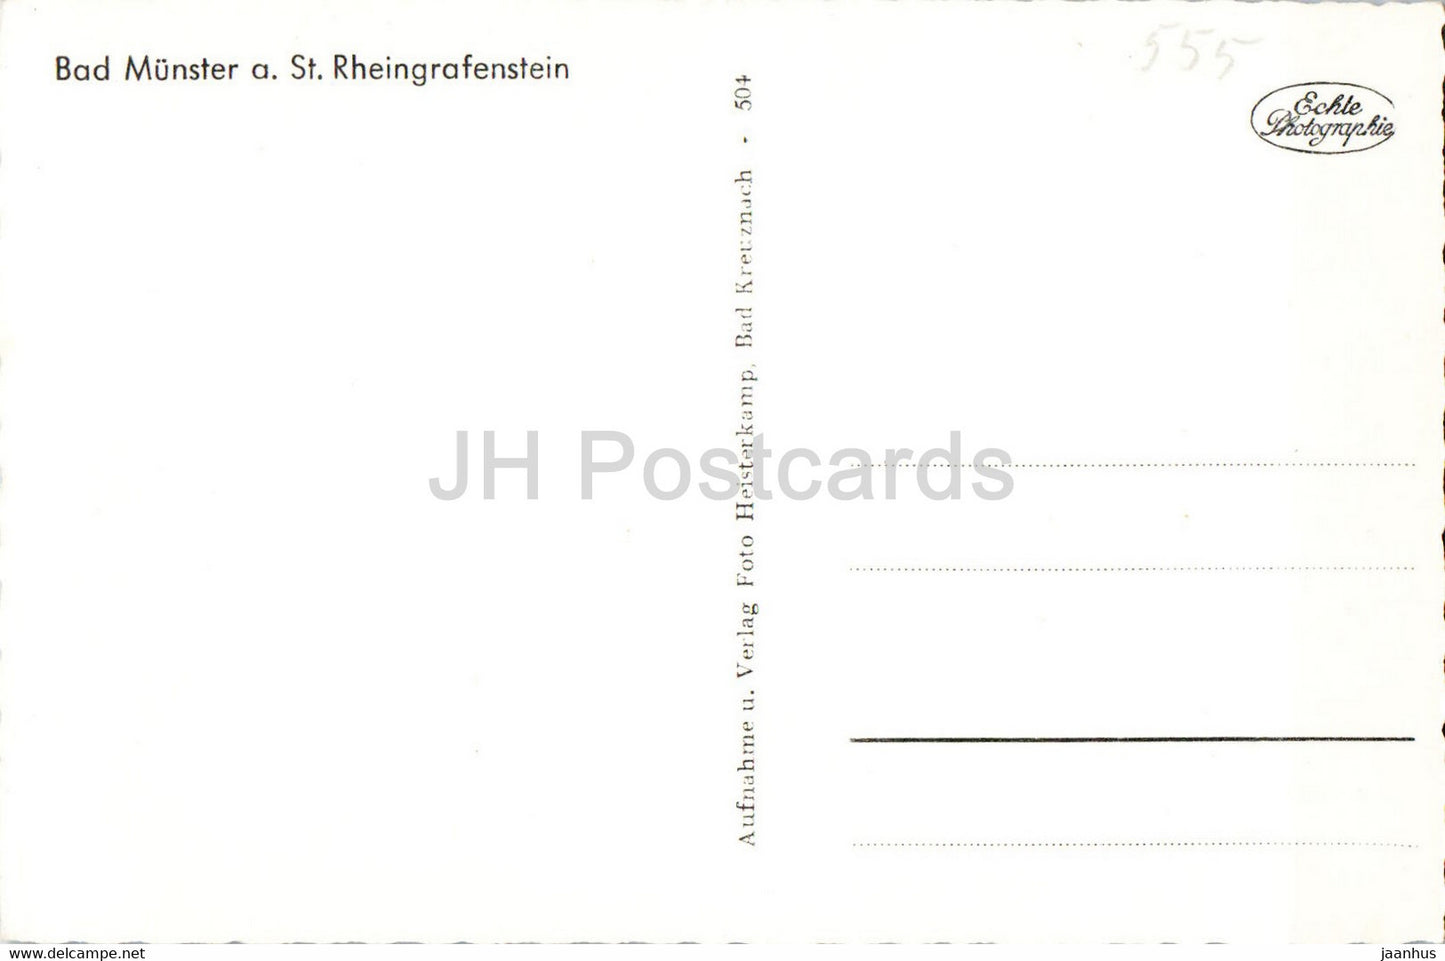 Bad Munster a St Rheingrafenstein - old postcard - Germany - unused